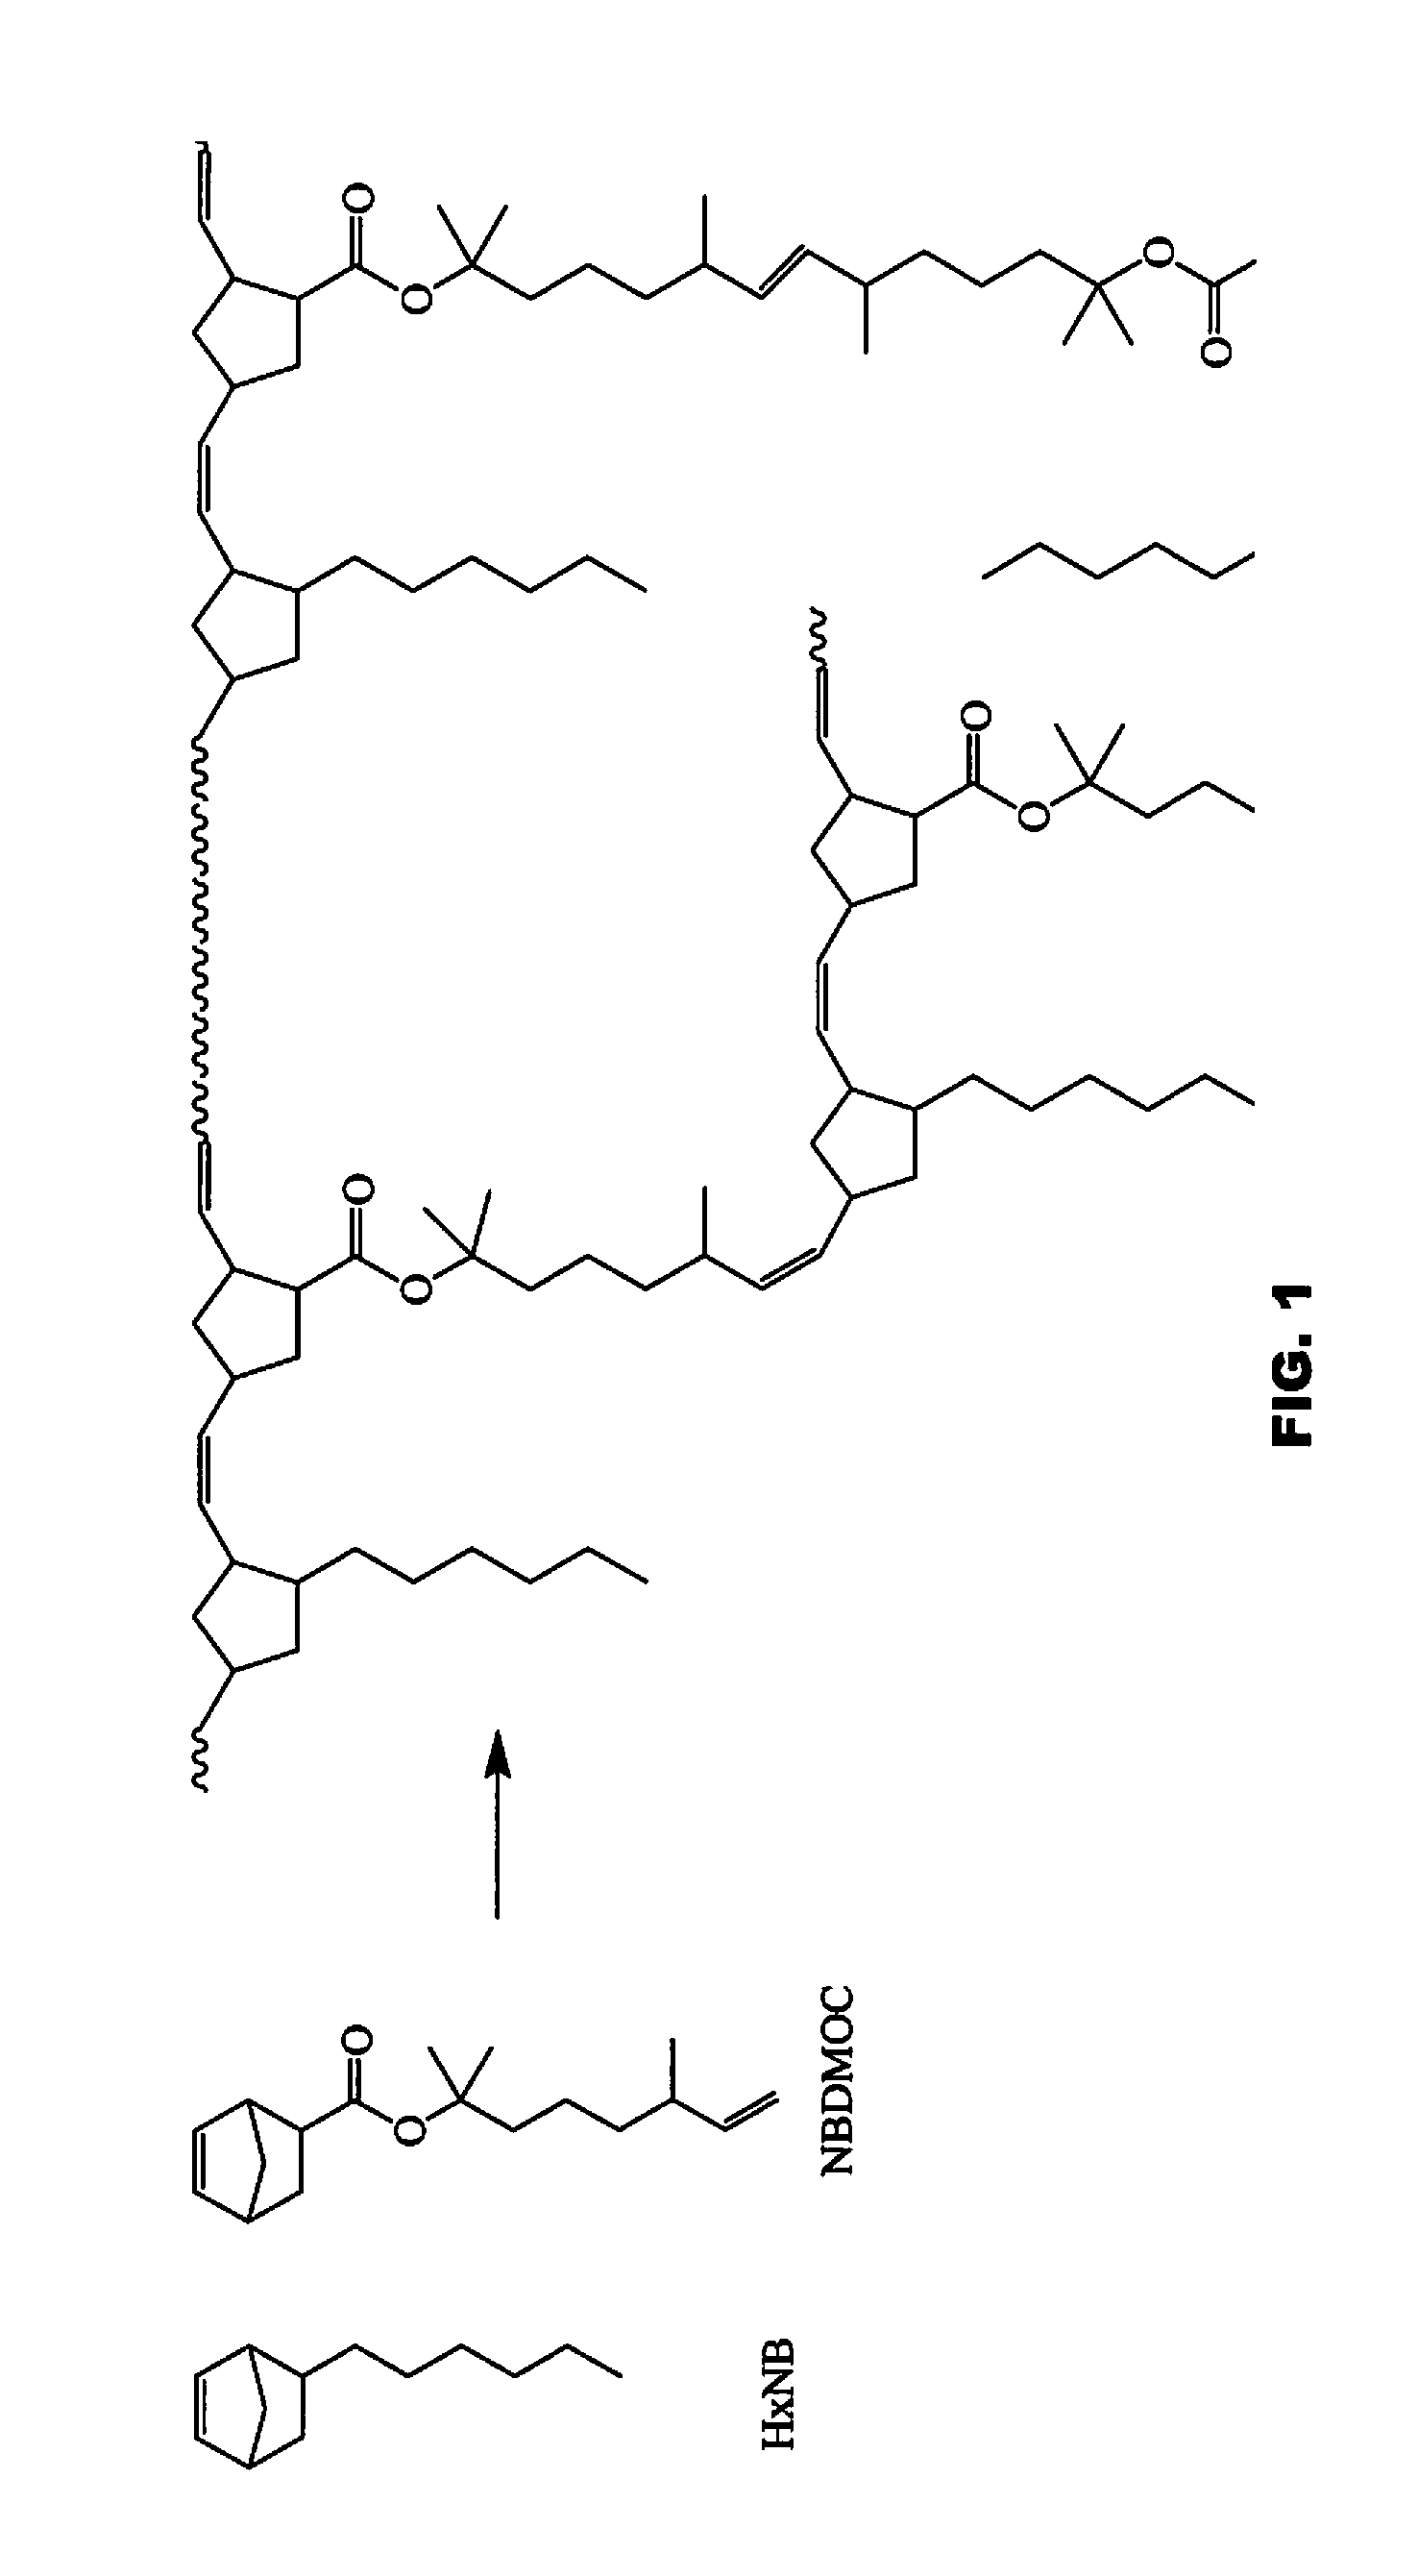 Flame retardant ROMP polycycloolefinic polymers